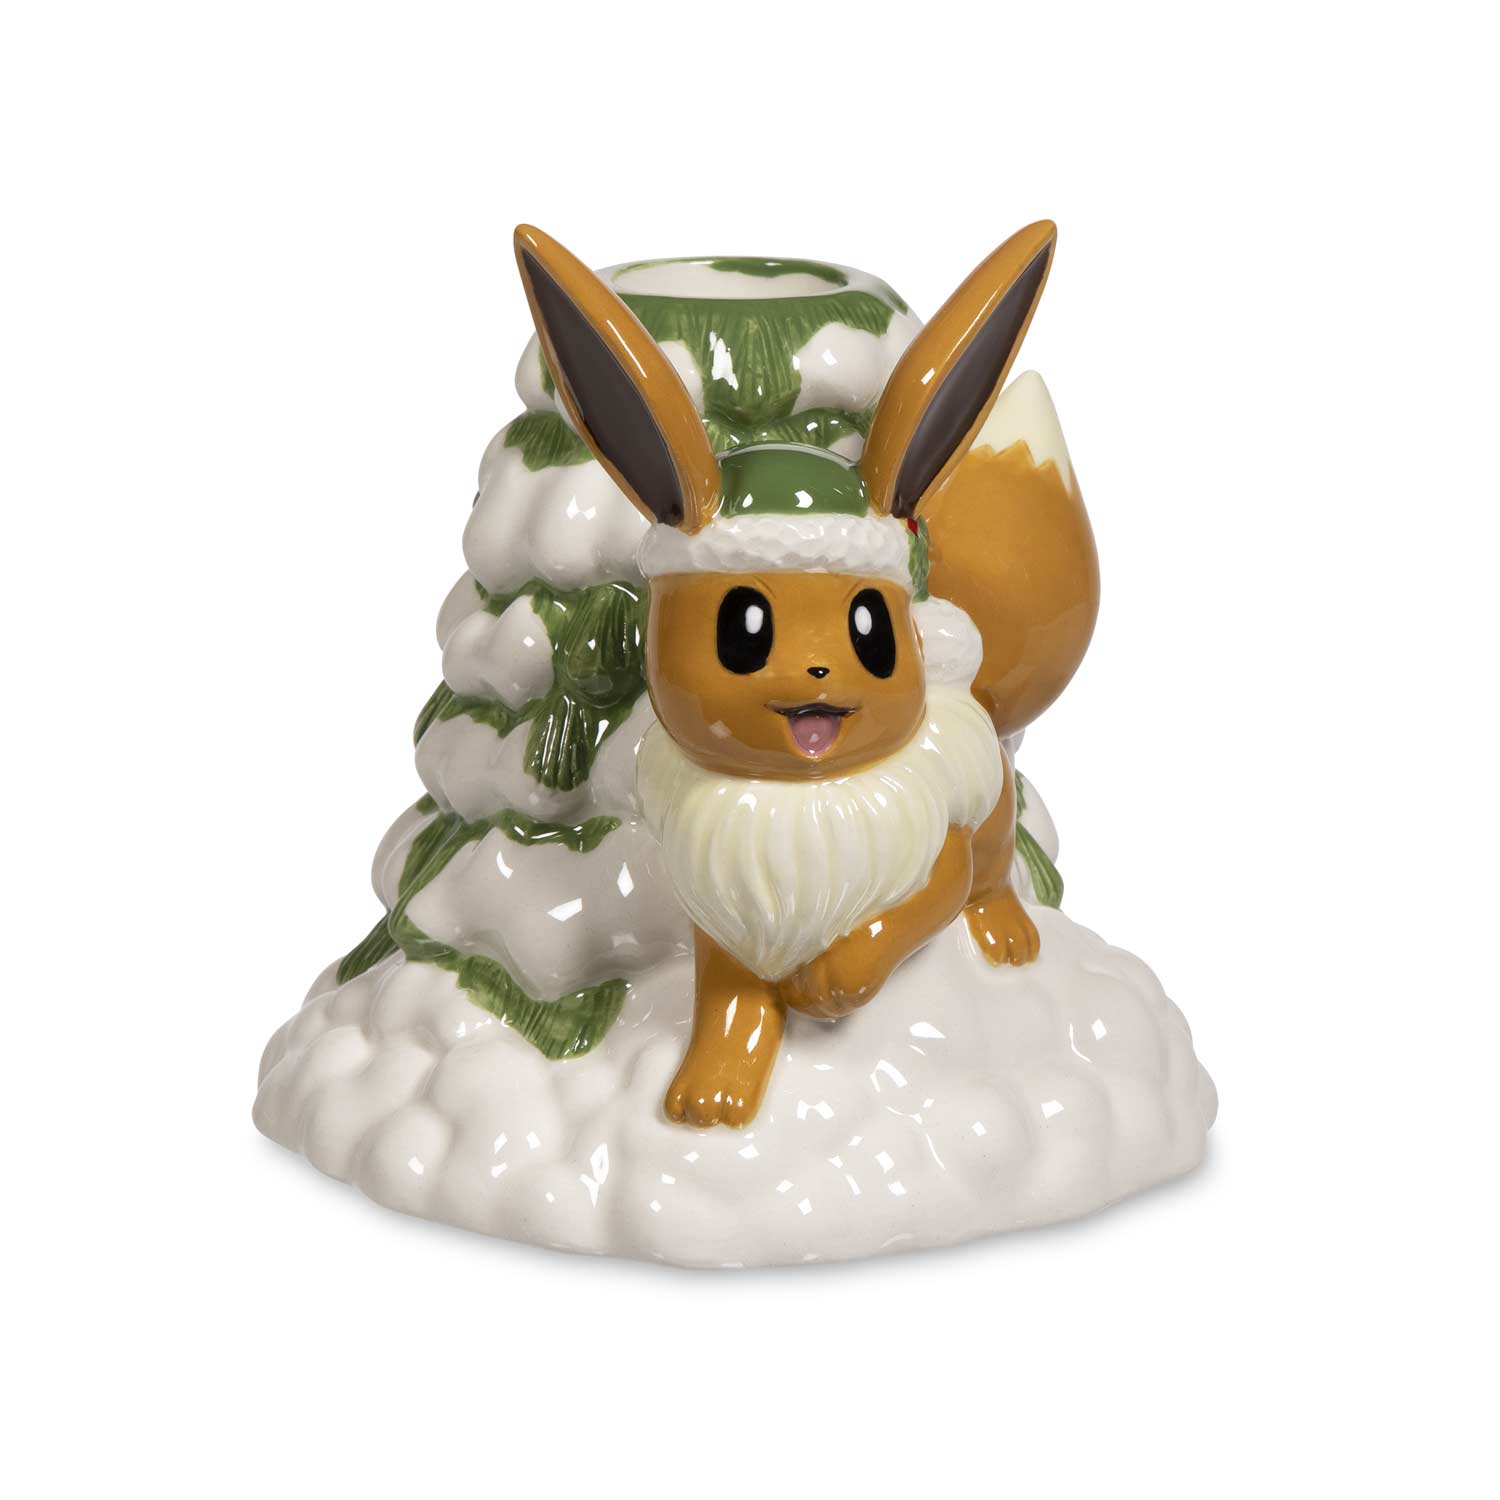 Pokemon 82843 Pack of 2 Figurines Pikachu and Evoli